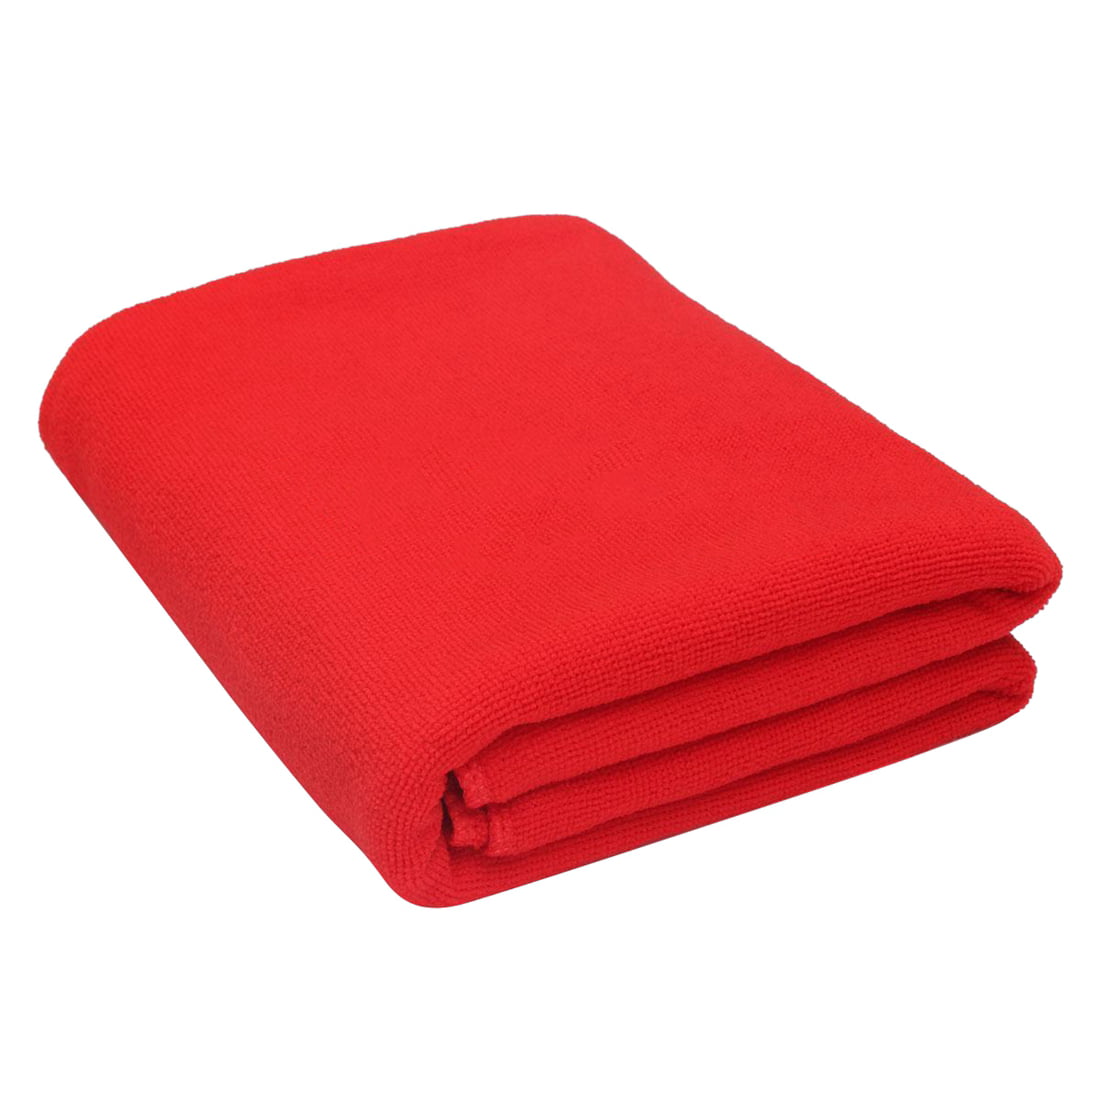 Microfibre Towel Travel Large Bath Camping Sports Beach Gym Yoga Quick Dry Towel 